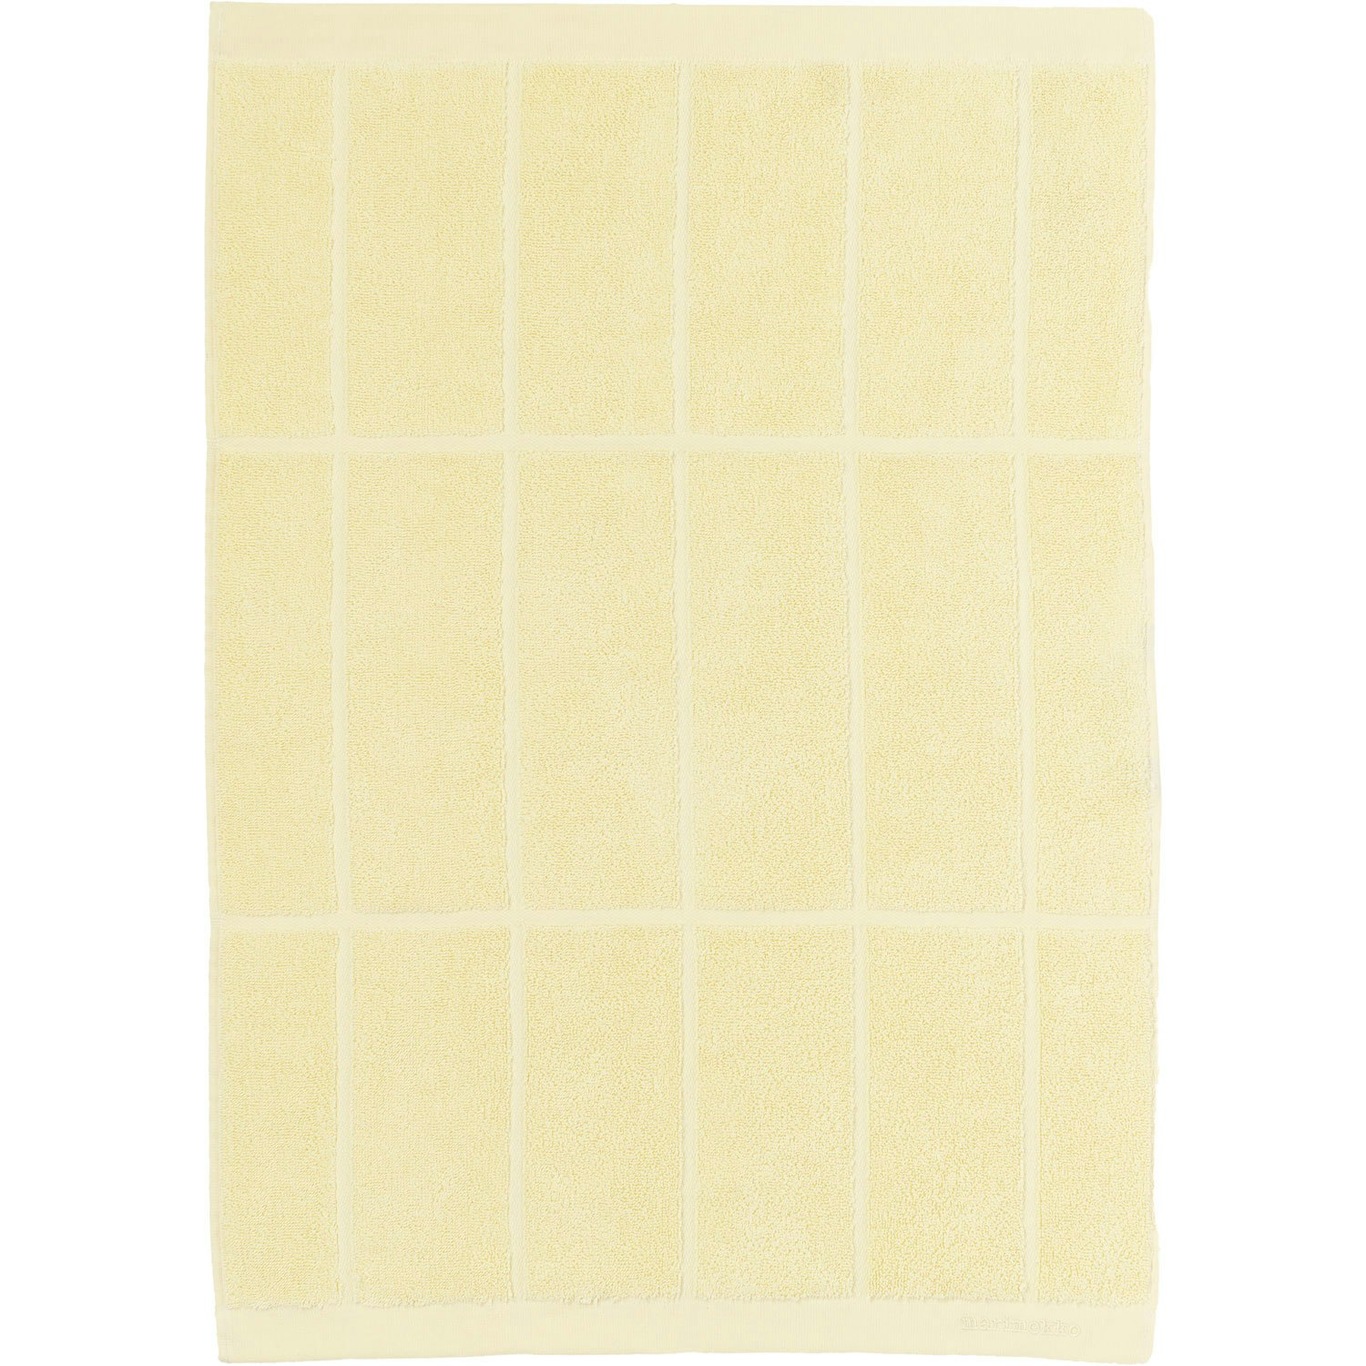 Tiiliskivi Håndklæde 50x70 cm, Butter Yellow